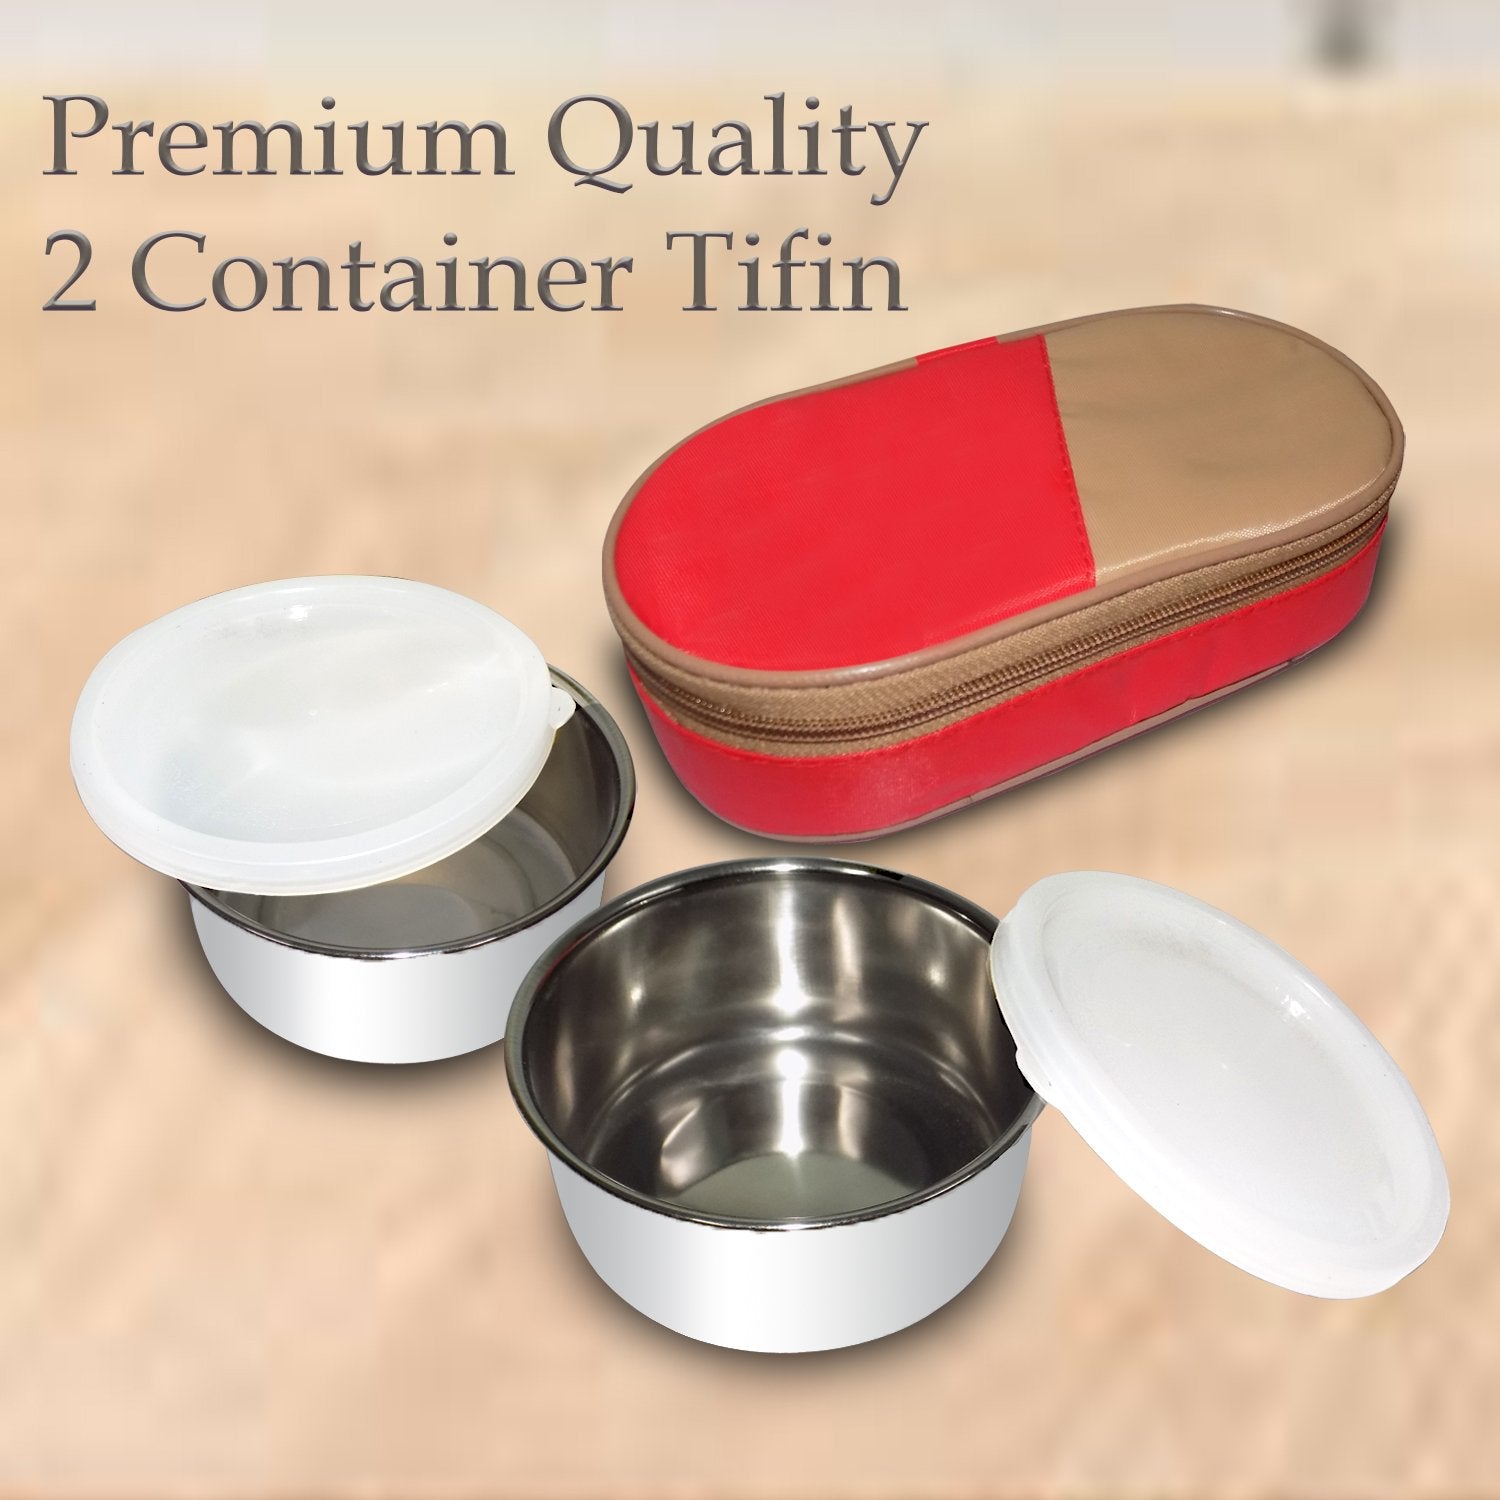 3666 zadoli premium quality 2 container tifin